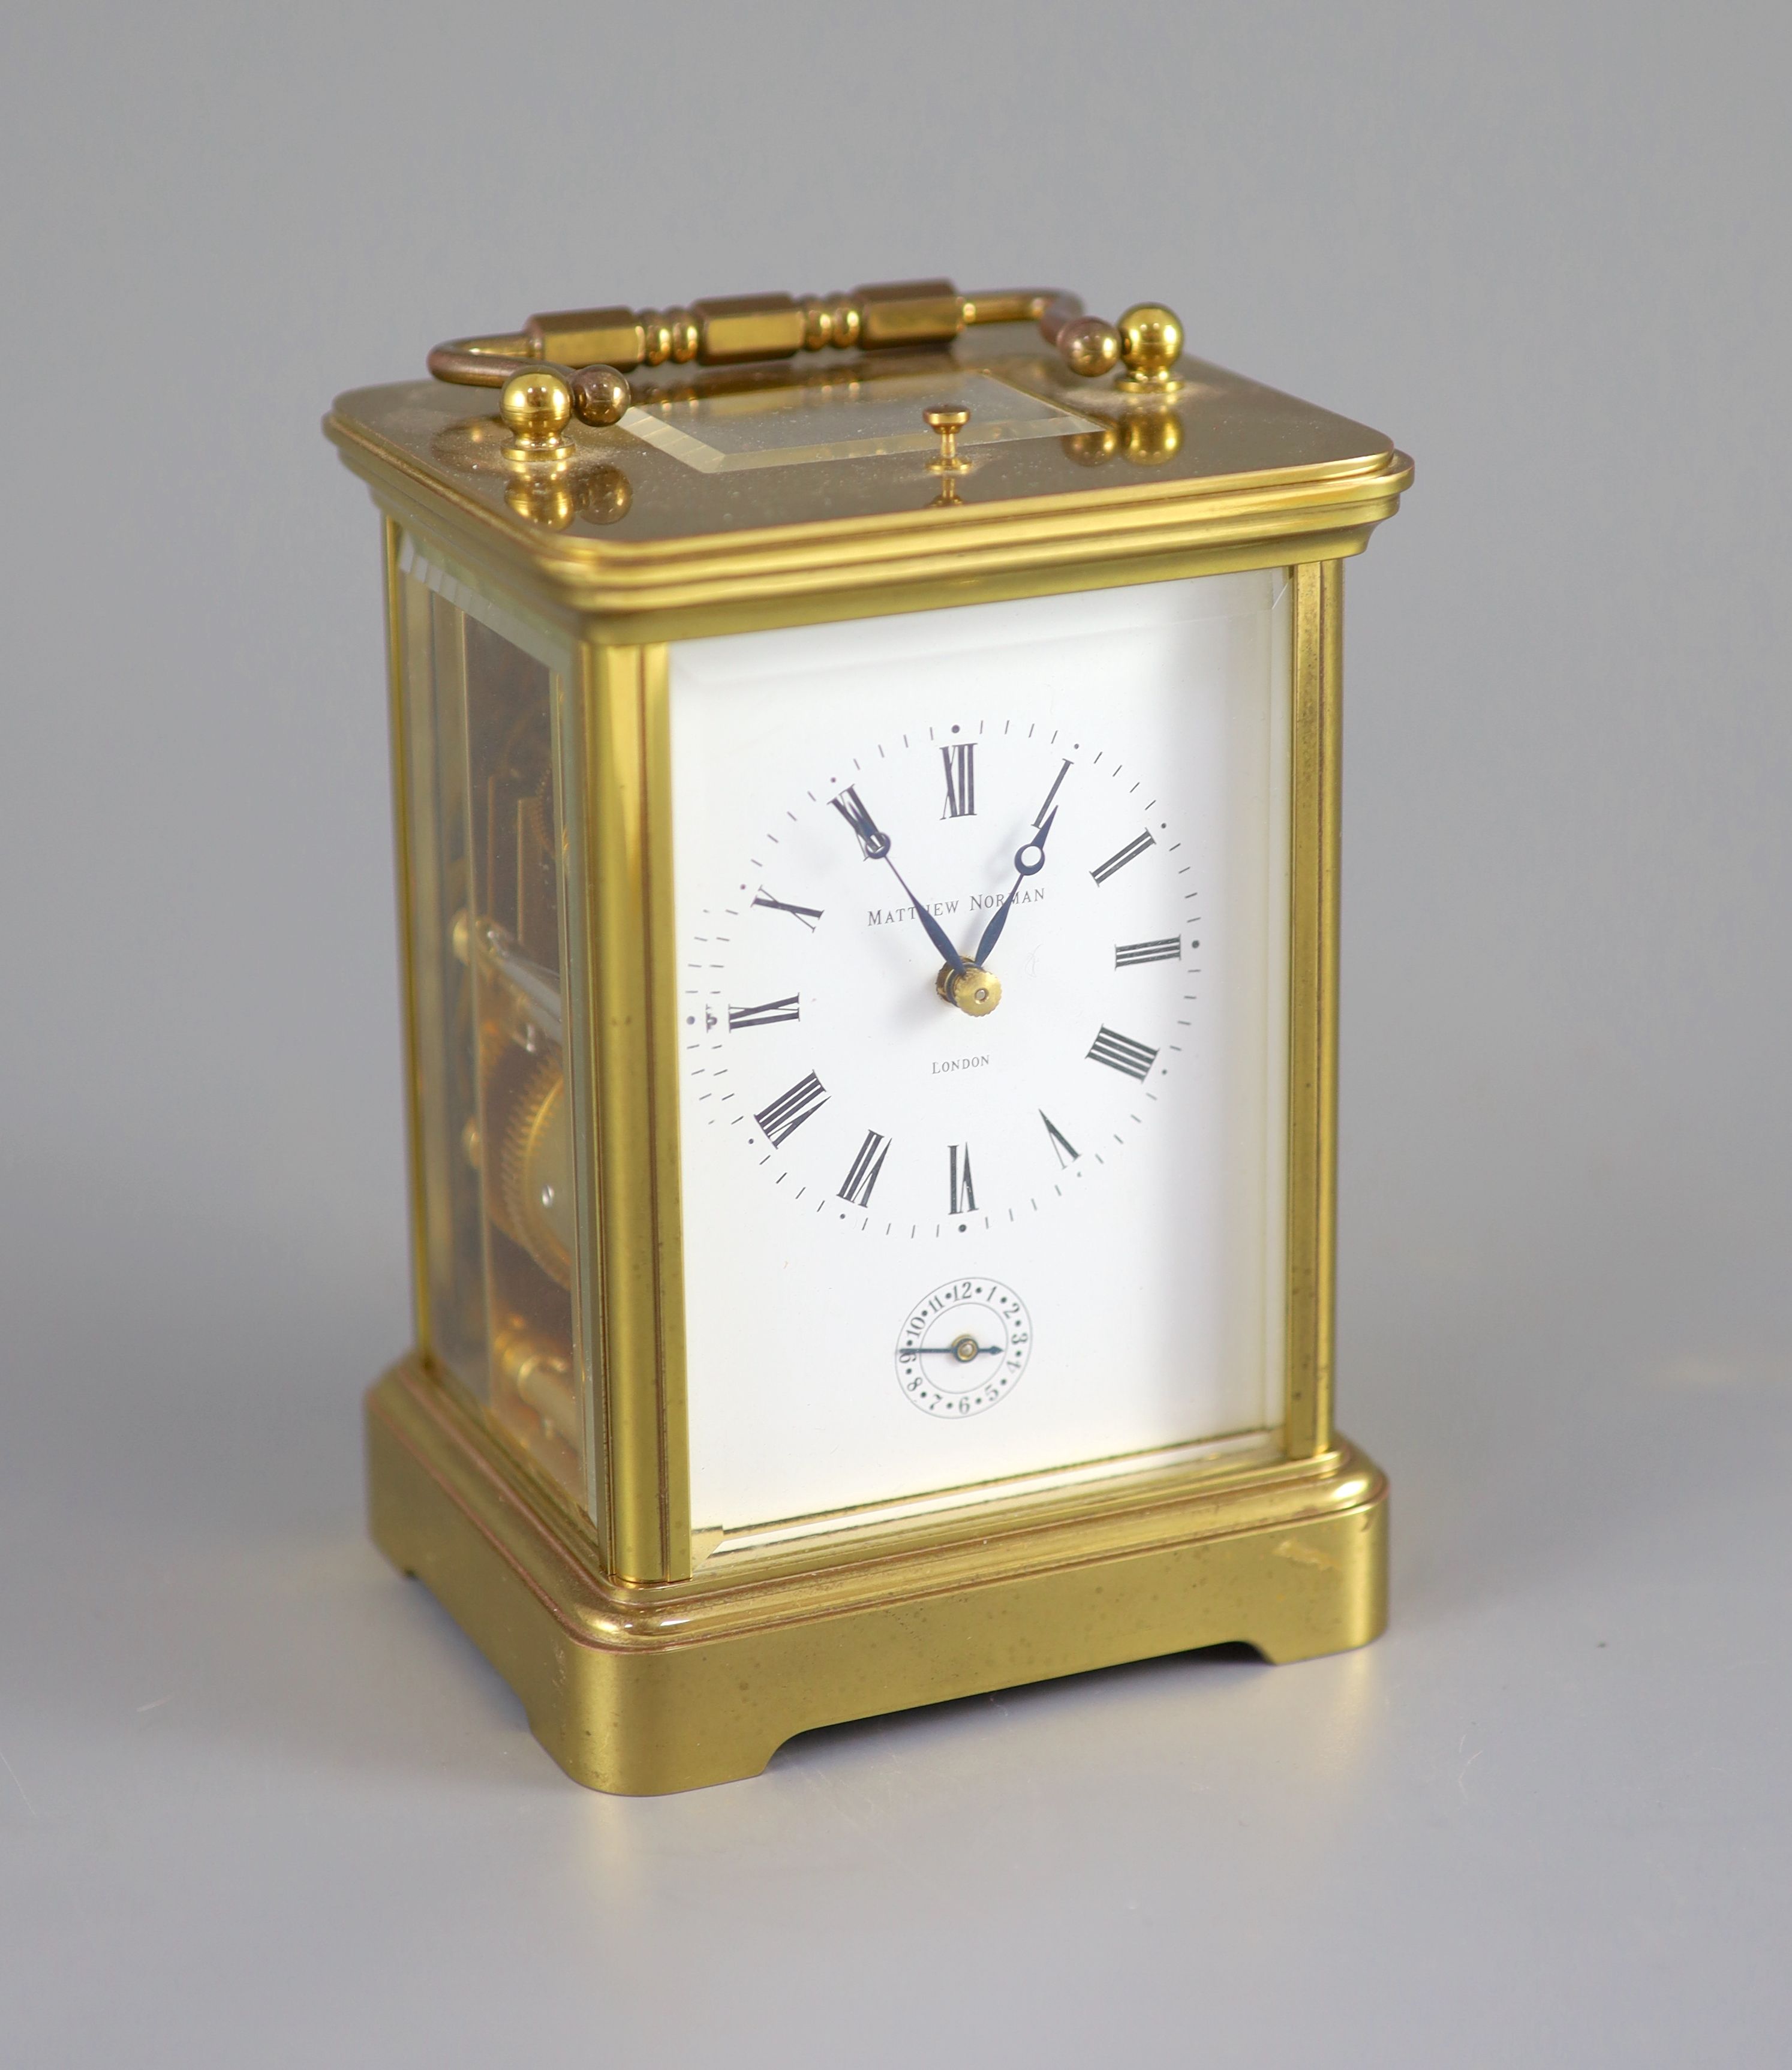 A large Swiss-made alarum brass carriage clock, Matthew Norman, London, 20th century, 13.5cm high